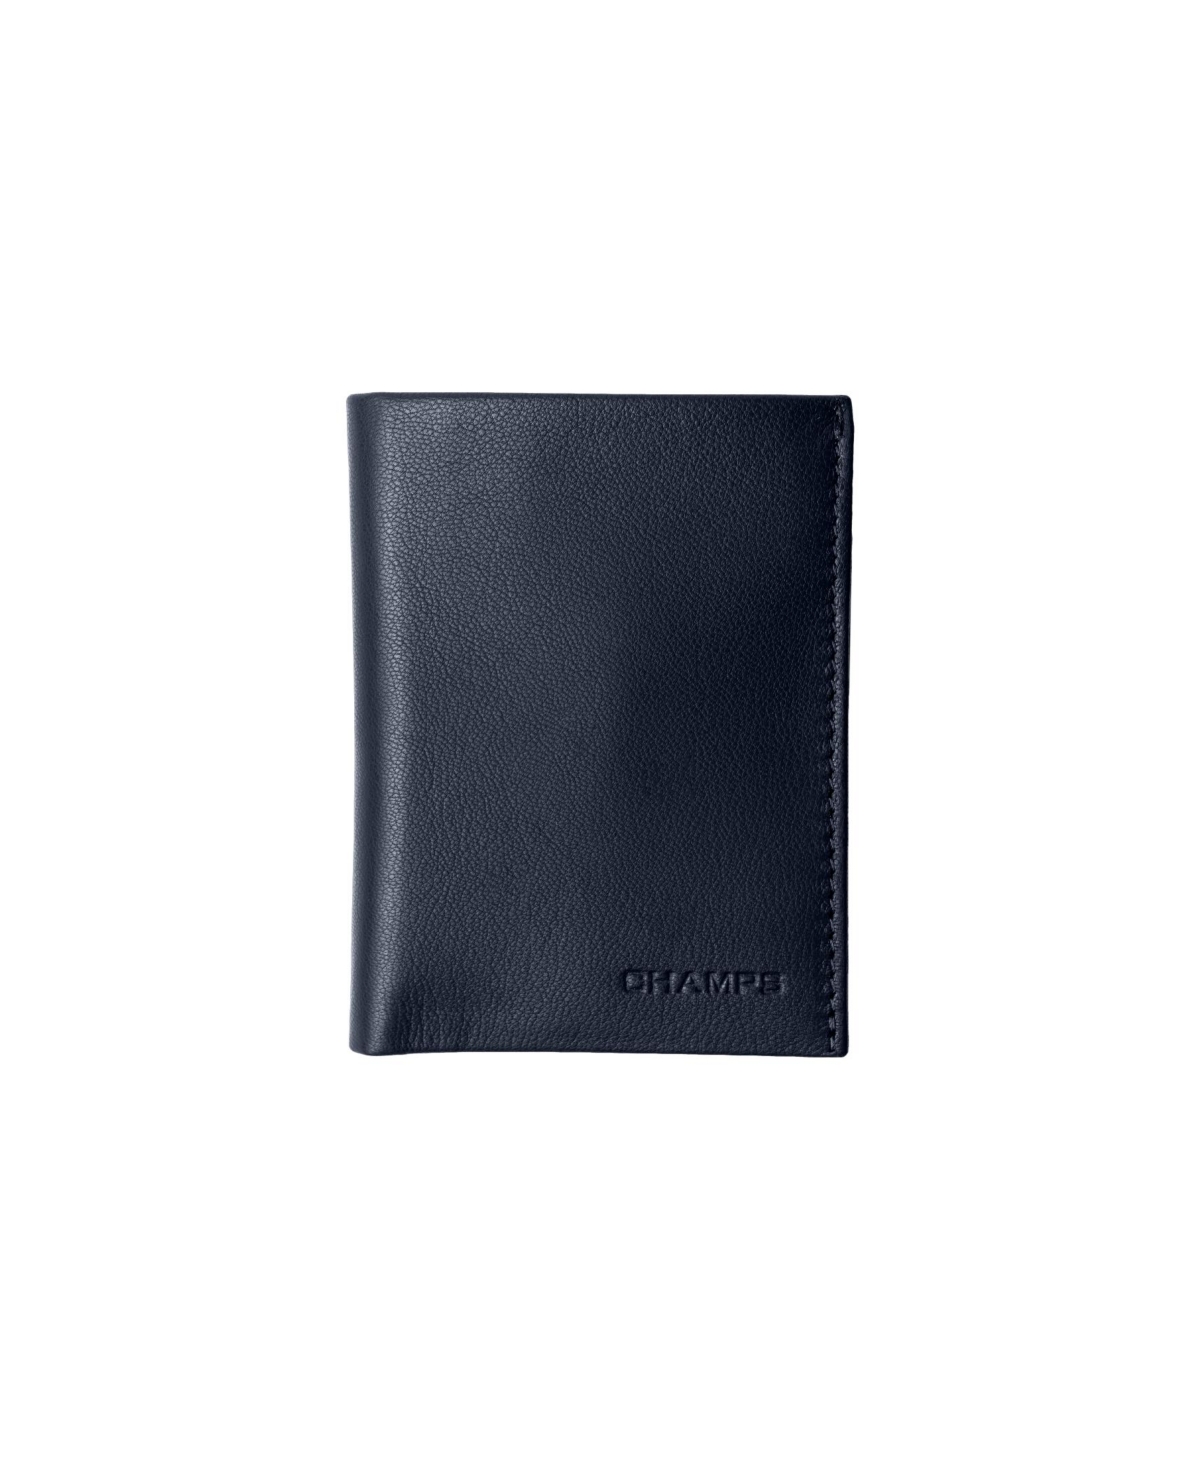 Men's Slim Sleeve Leather Rfid Wallet in Gift Box - Khaki